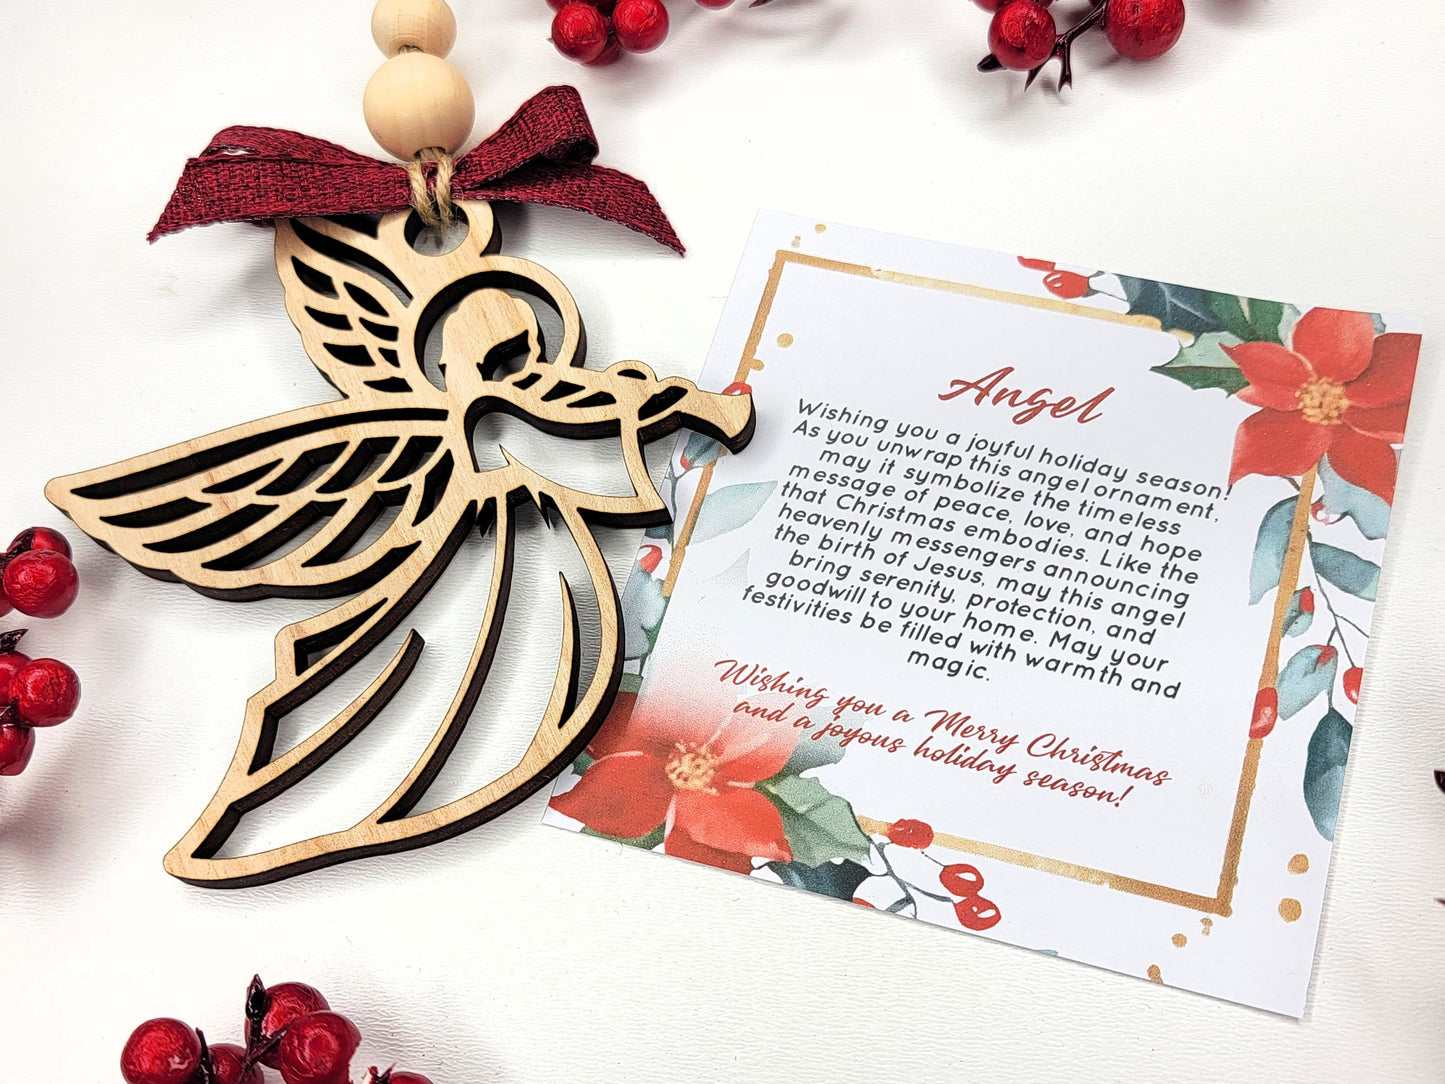 Angel Holiday Symbol - 1 Symbol Ornament - 2 Prints - 2 Box Designs - SVG, PDF, AI File Download - Glowforge and Lightburn Tested